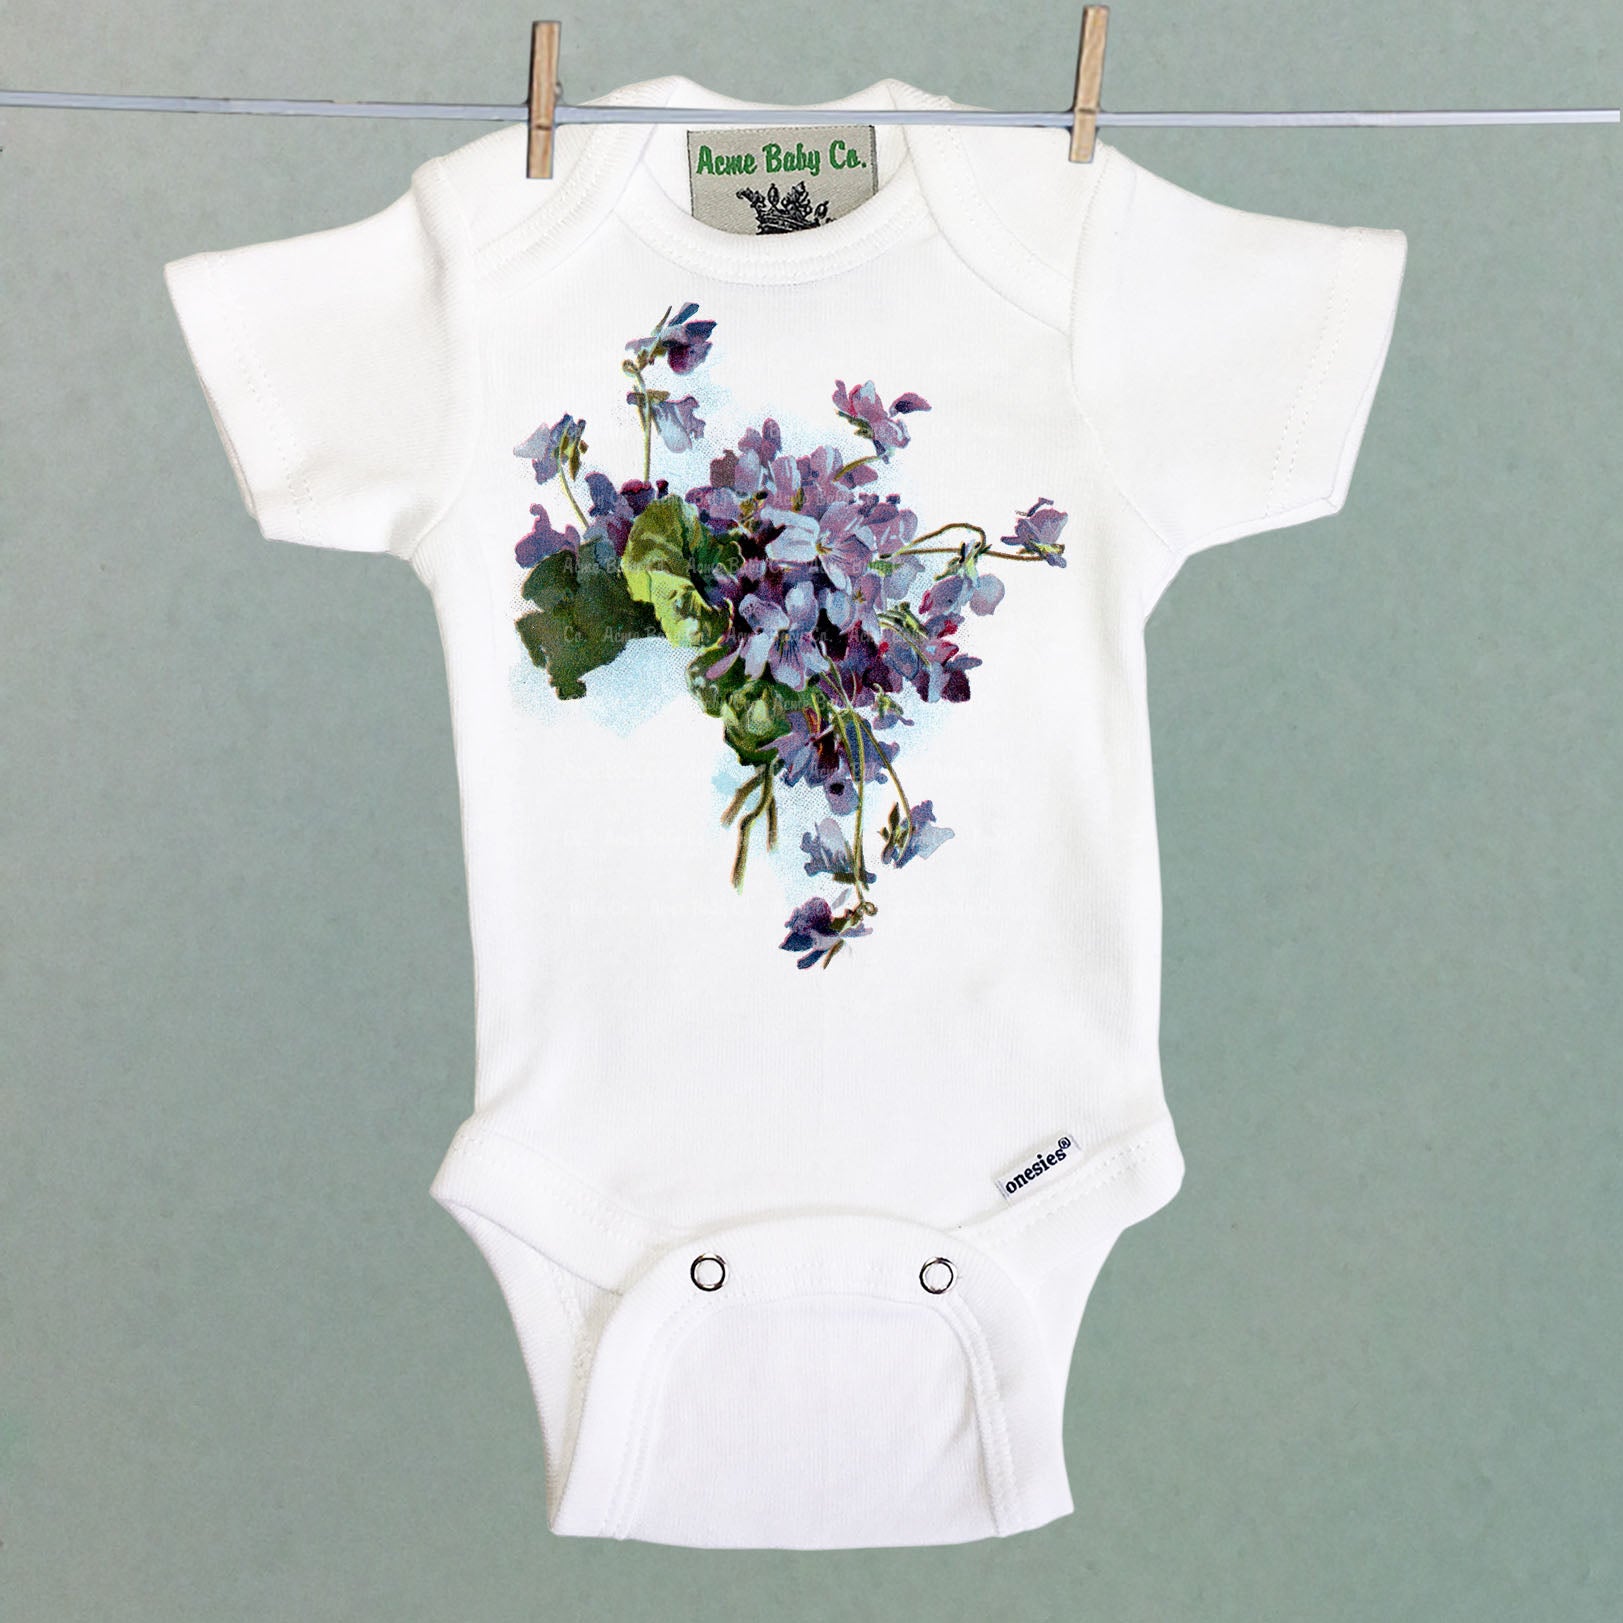 Trailing Violets Organic One Piece Baby Bodysuit